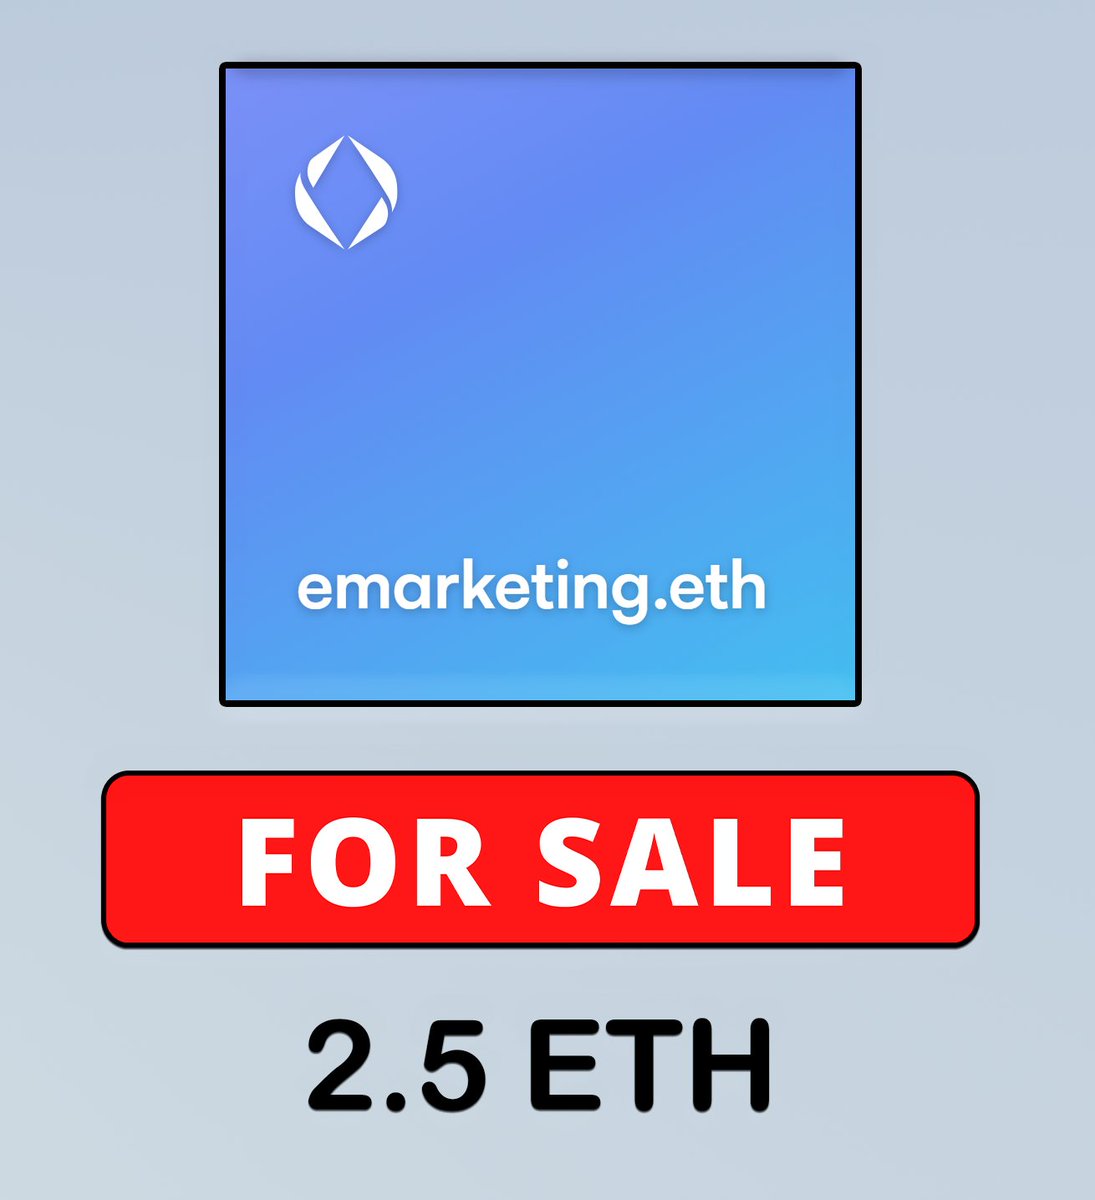 eMarketing.eth  

link  : vision.io/name/emarketing

#ens #Ethereum #MarketingStrategy #MarketingTips #DomainForSale